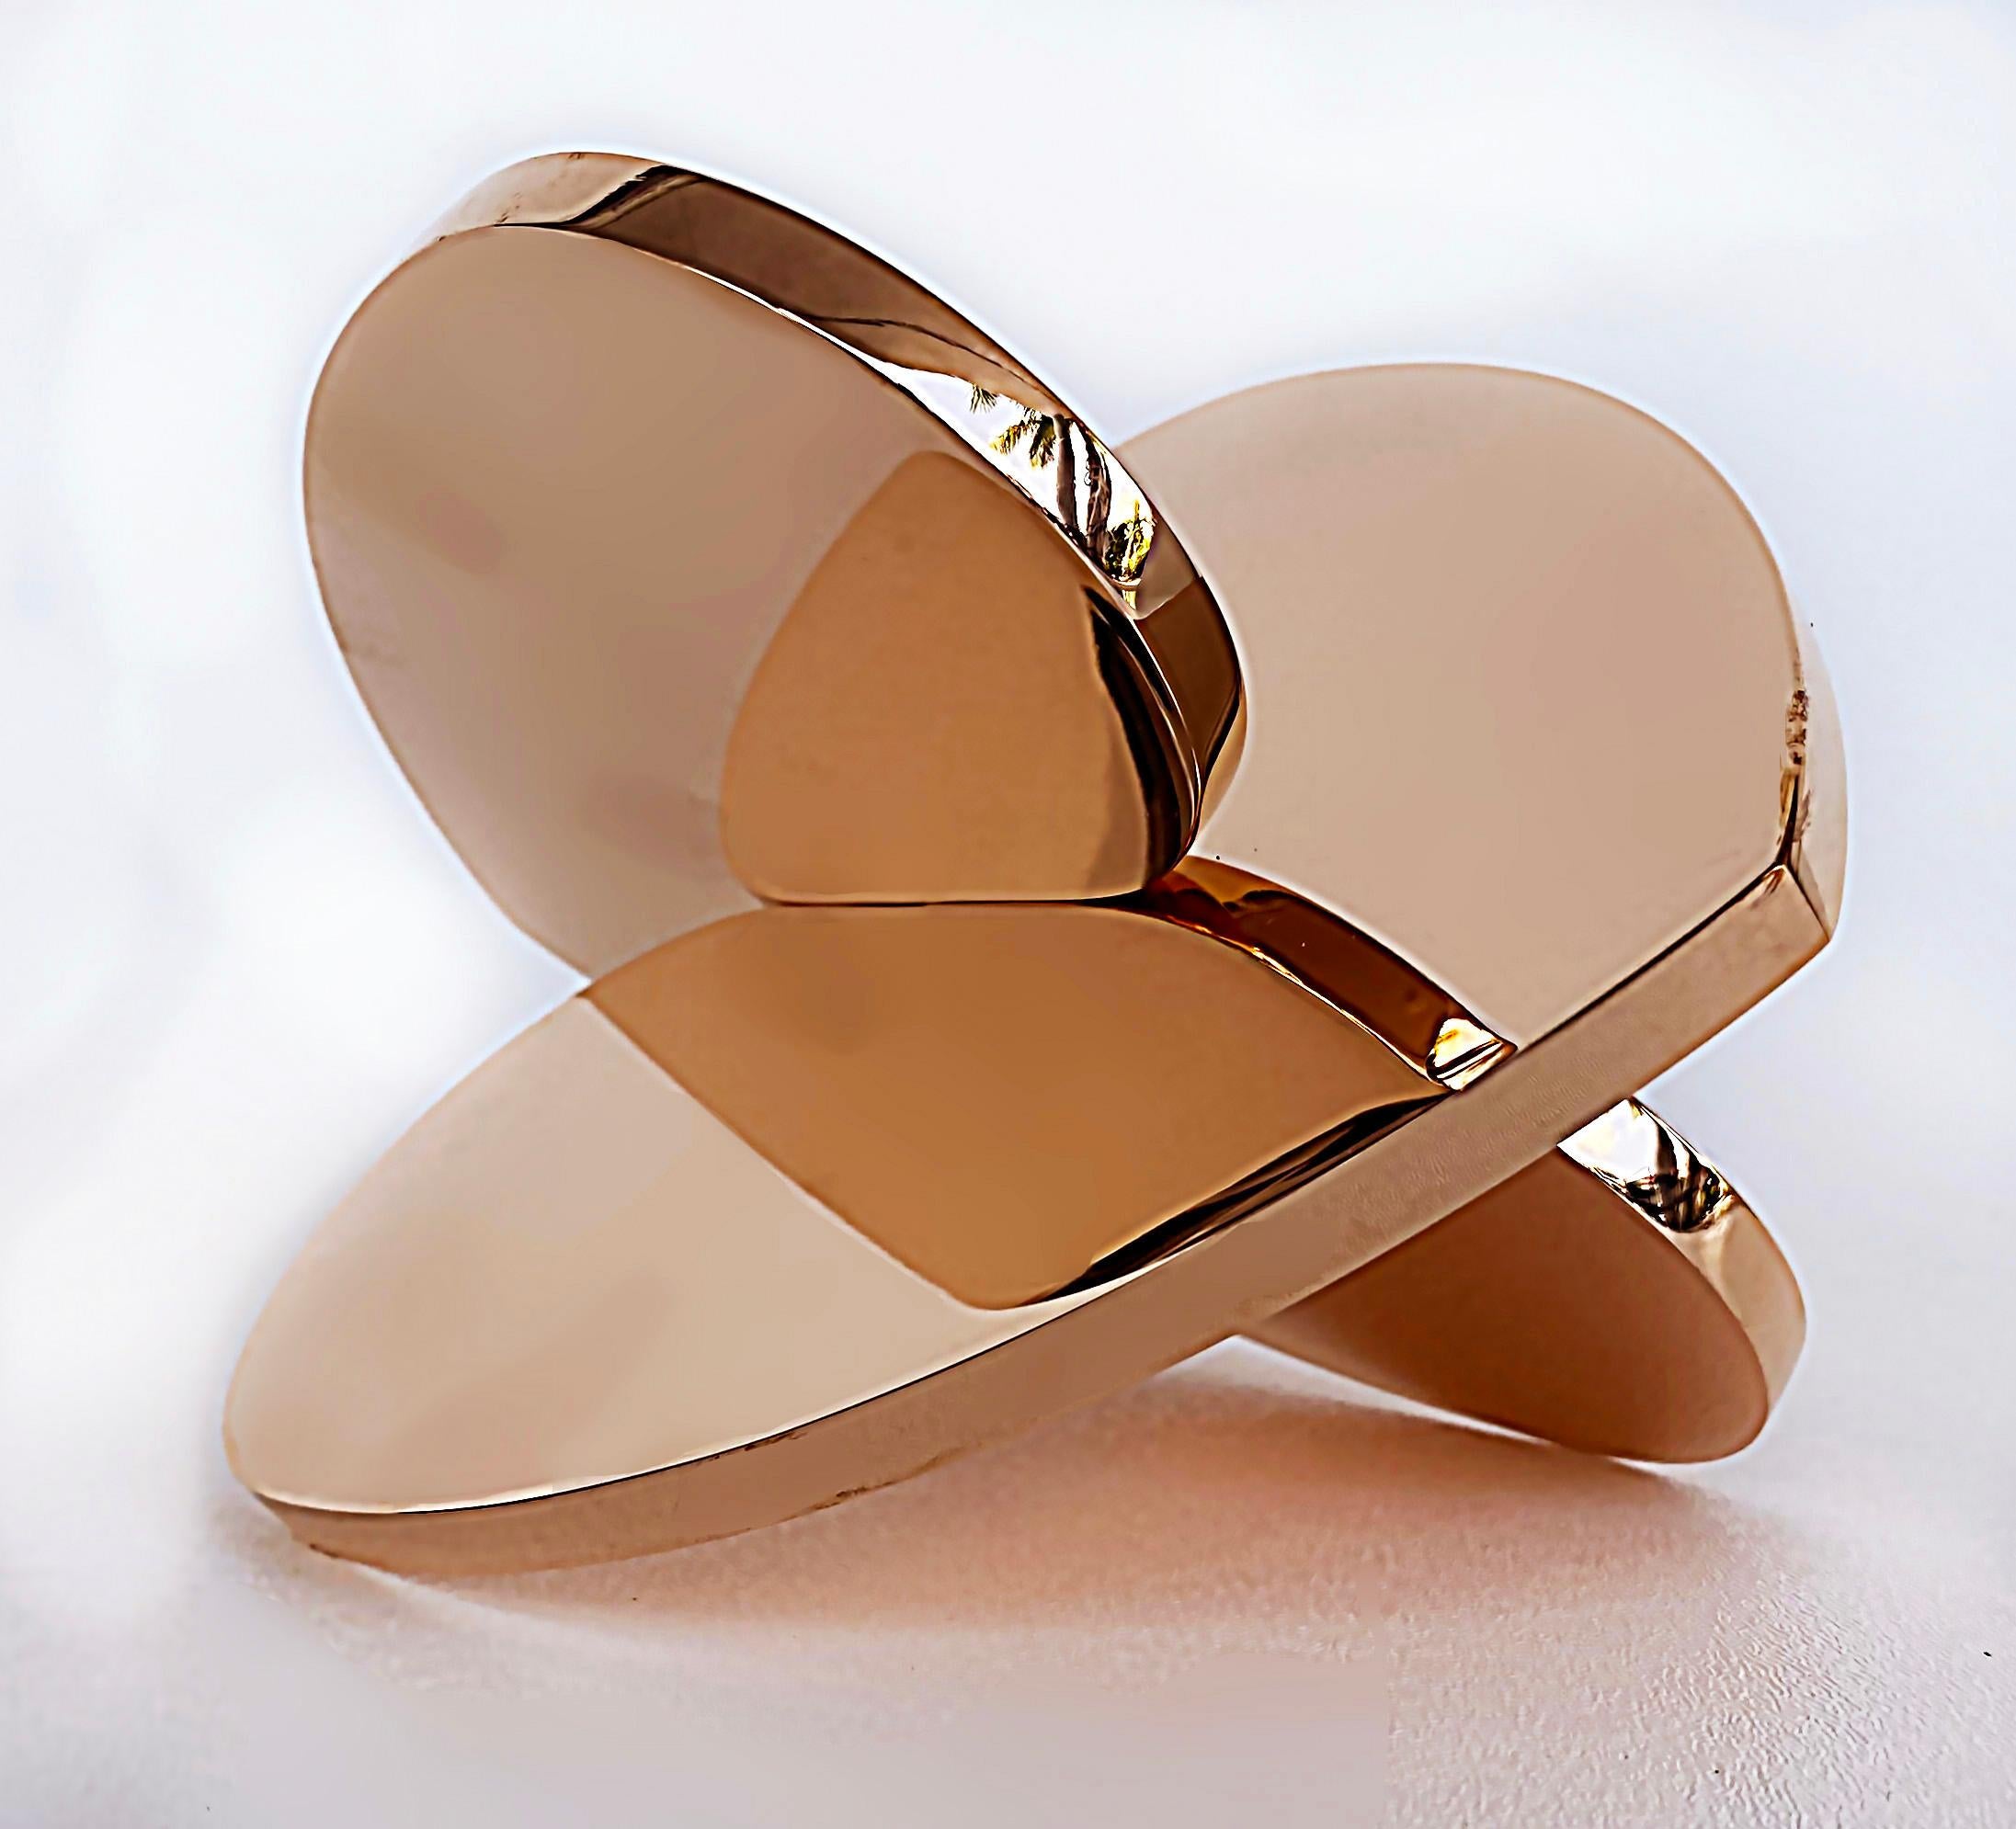 Polished Copper Interlocking Heart Sculptures Michael Gitter & Phu Truong, Solid